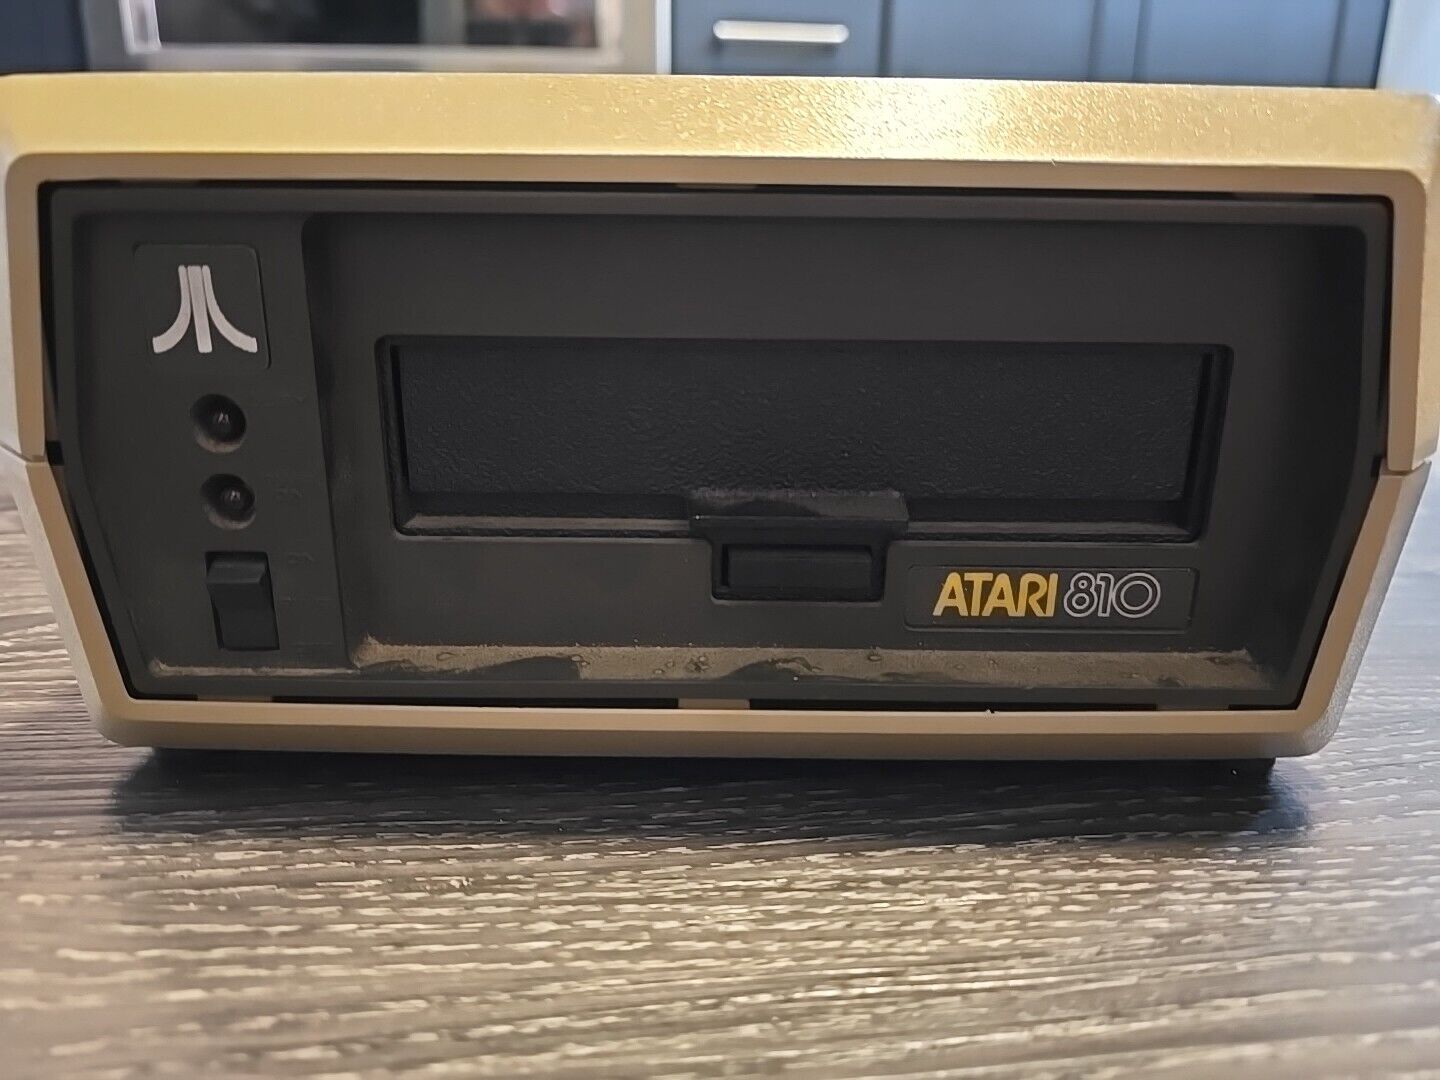 Atari 810 Floppy Disk Drive for Atari 8-bit Computer *ATARI* VINTAGE COMPUTER*